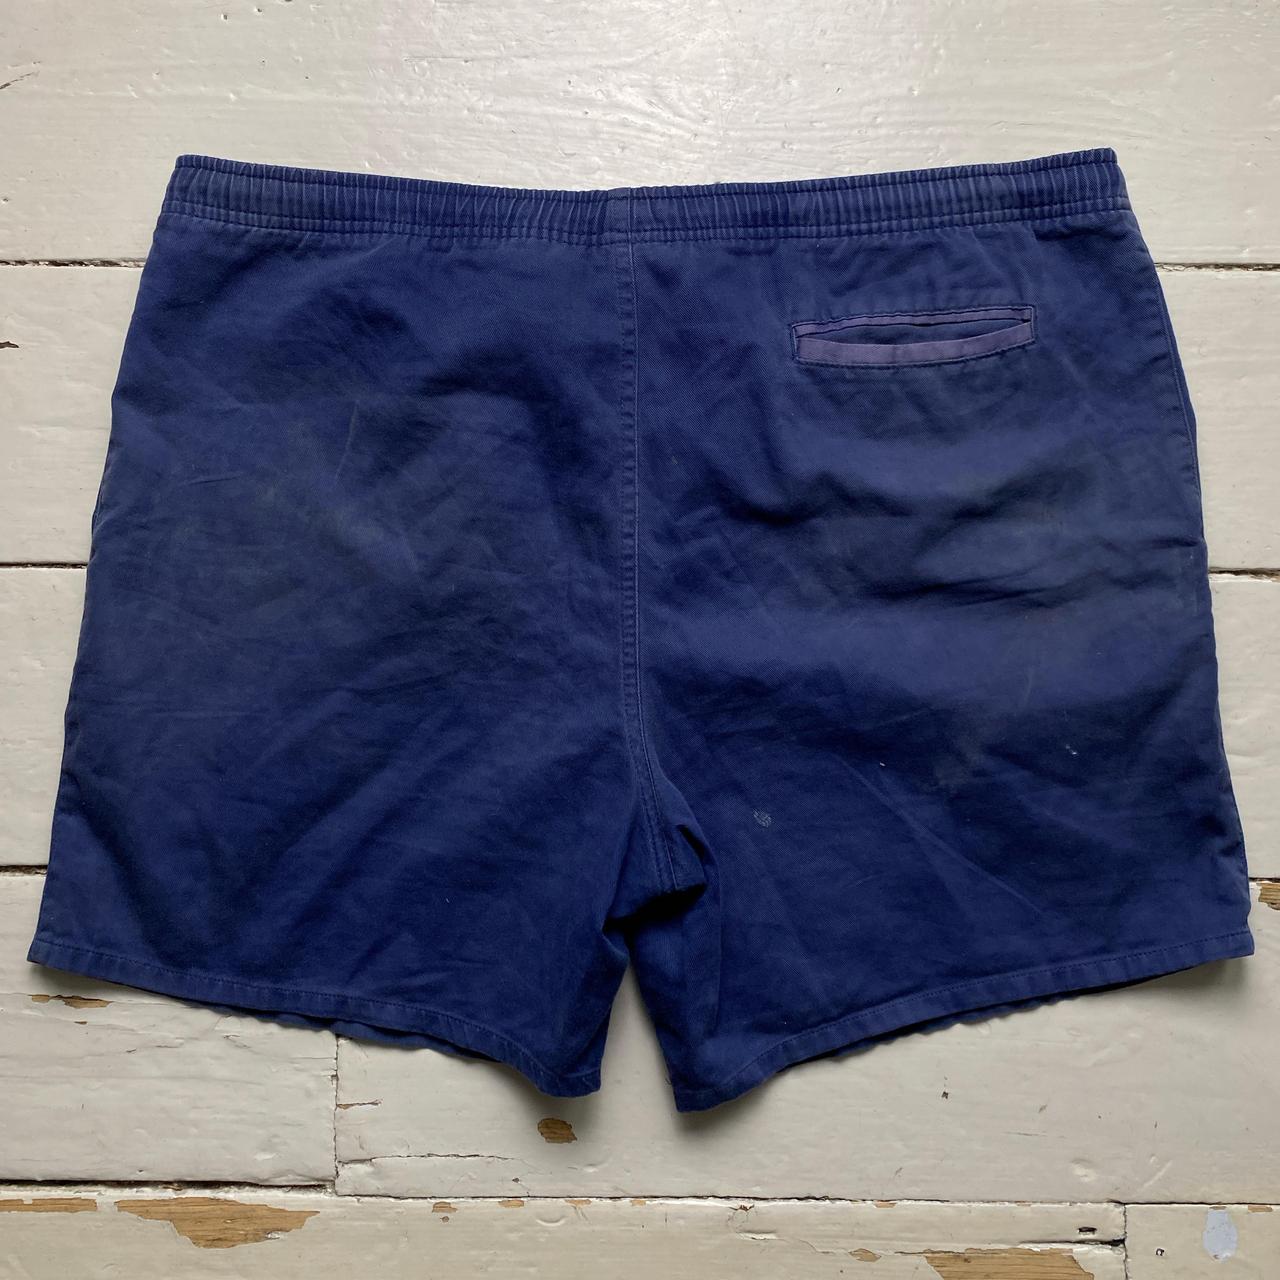 Nike Vintage 90’s Navy and White Swoosh Shorts